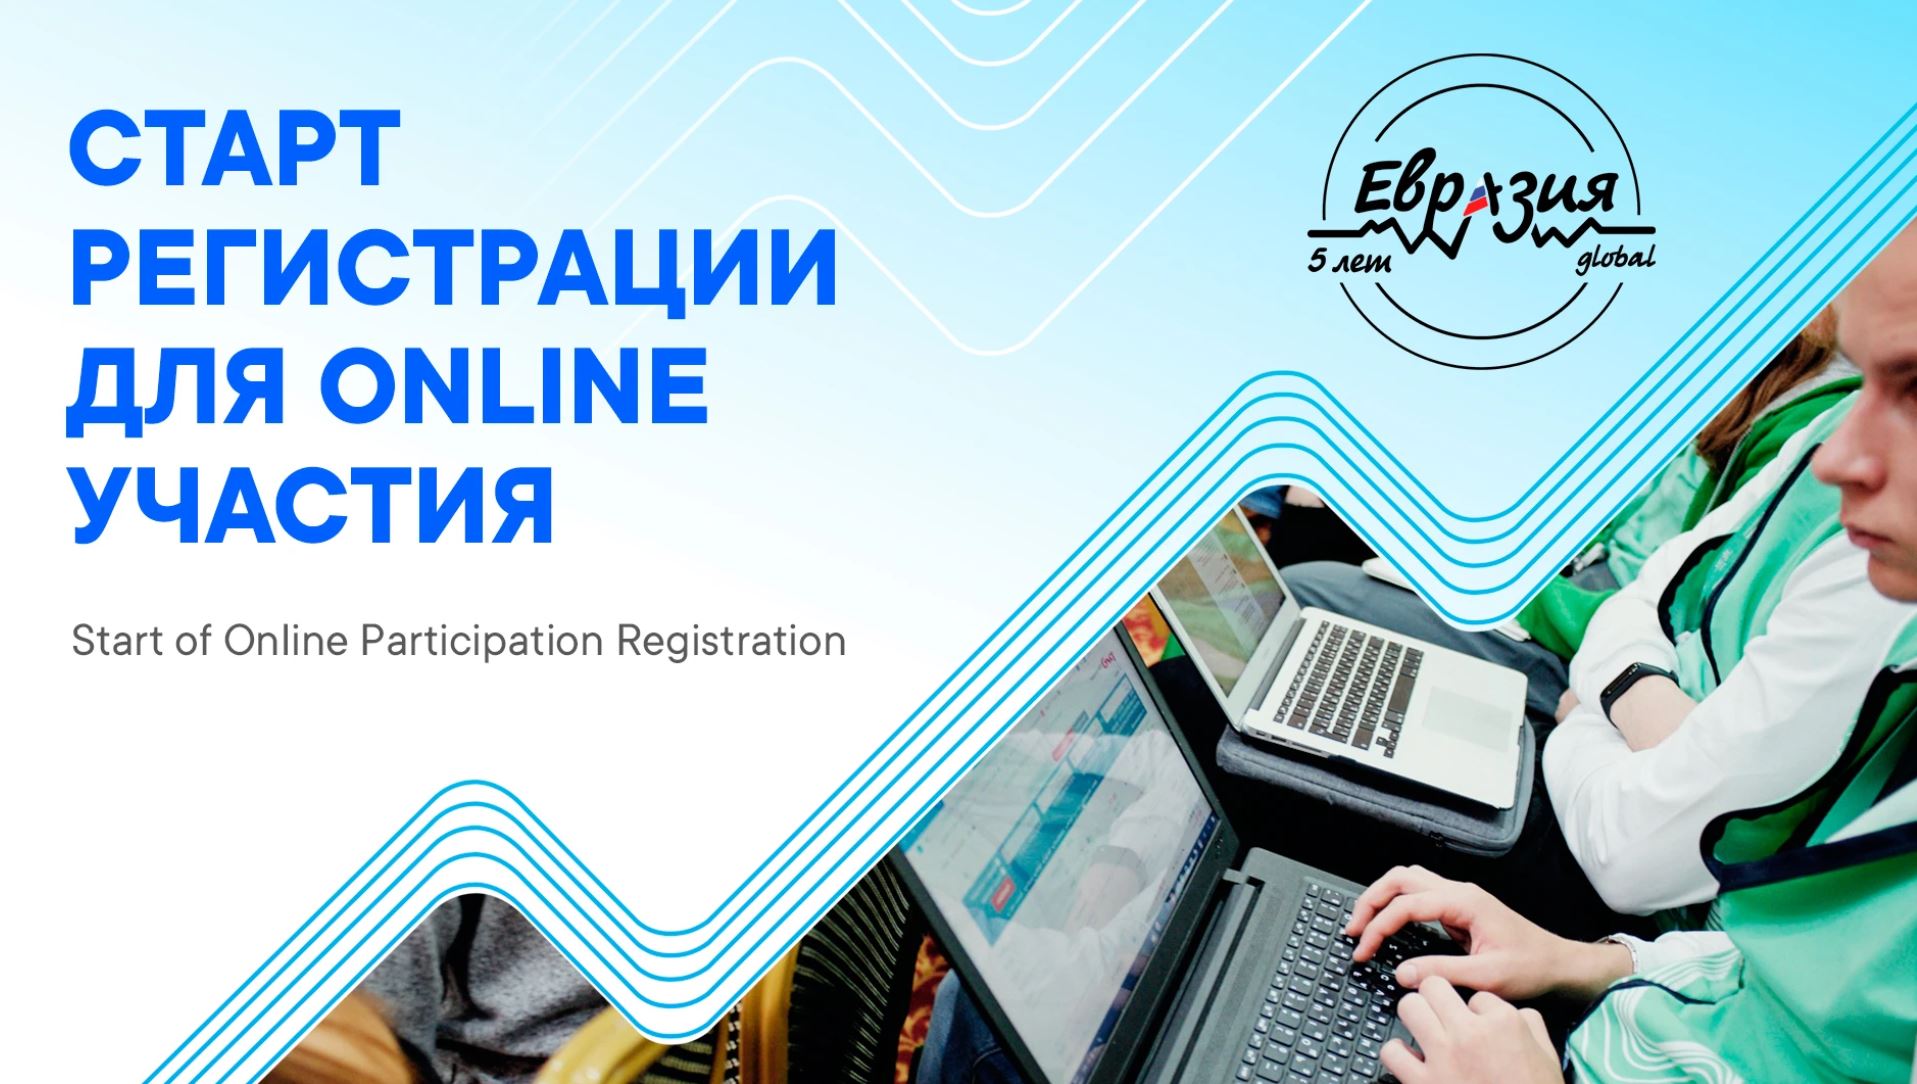 Открылась регистрация на онлайн-форум «Евразия Global»